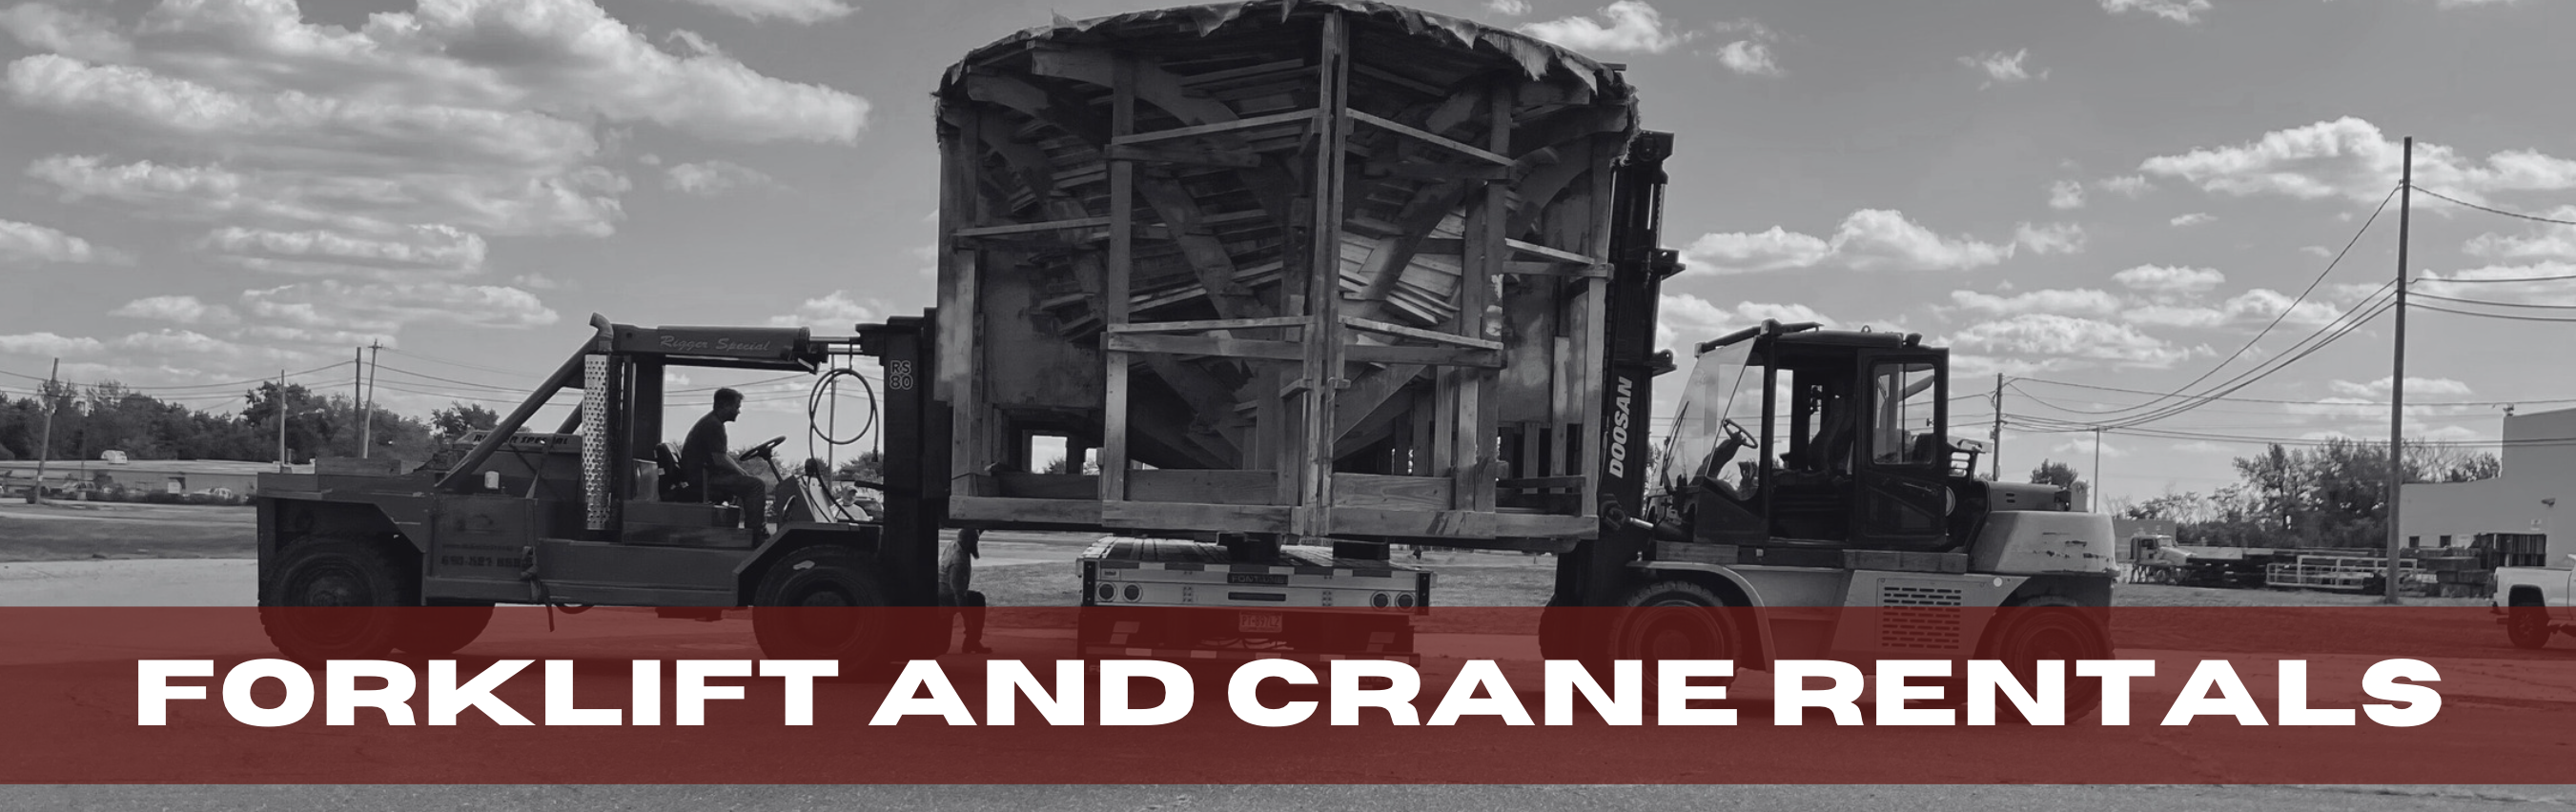 Forklift and Crane Rentals - Equip Trucking & Warehousing, LLC